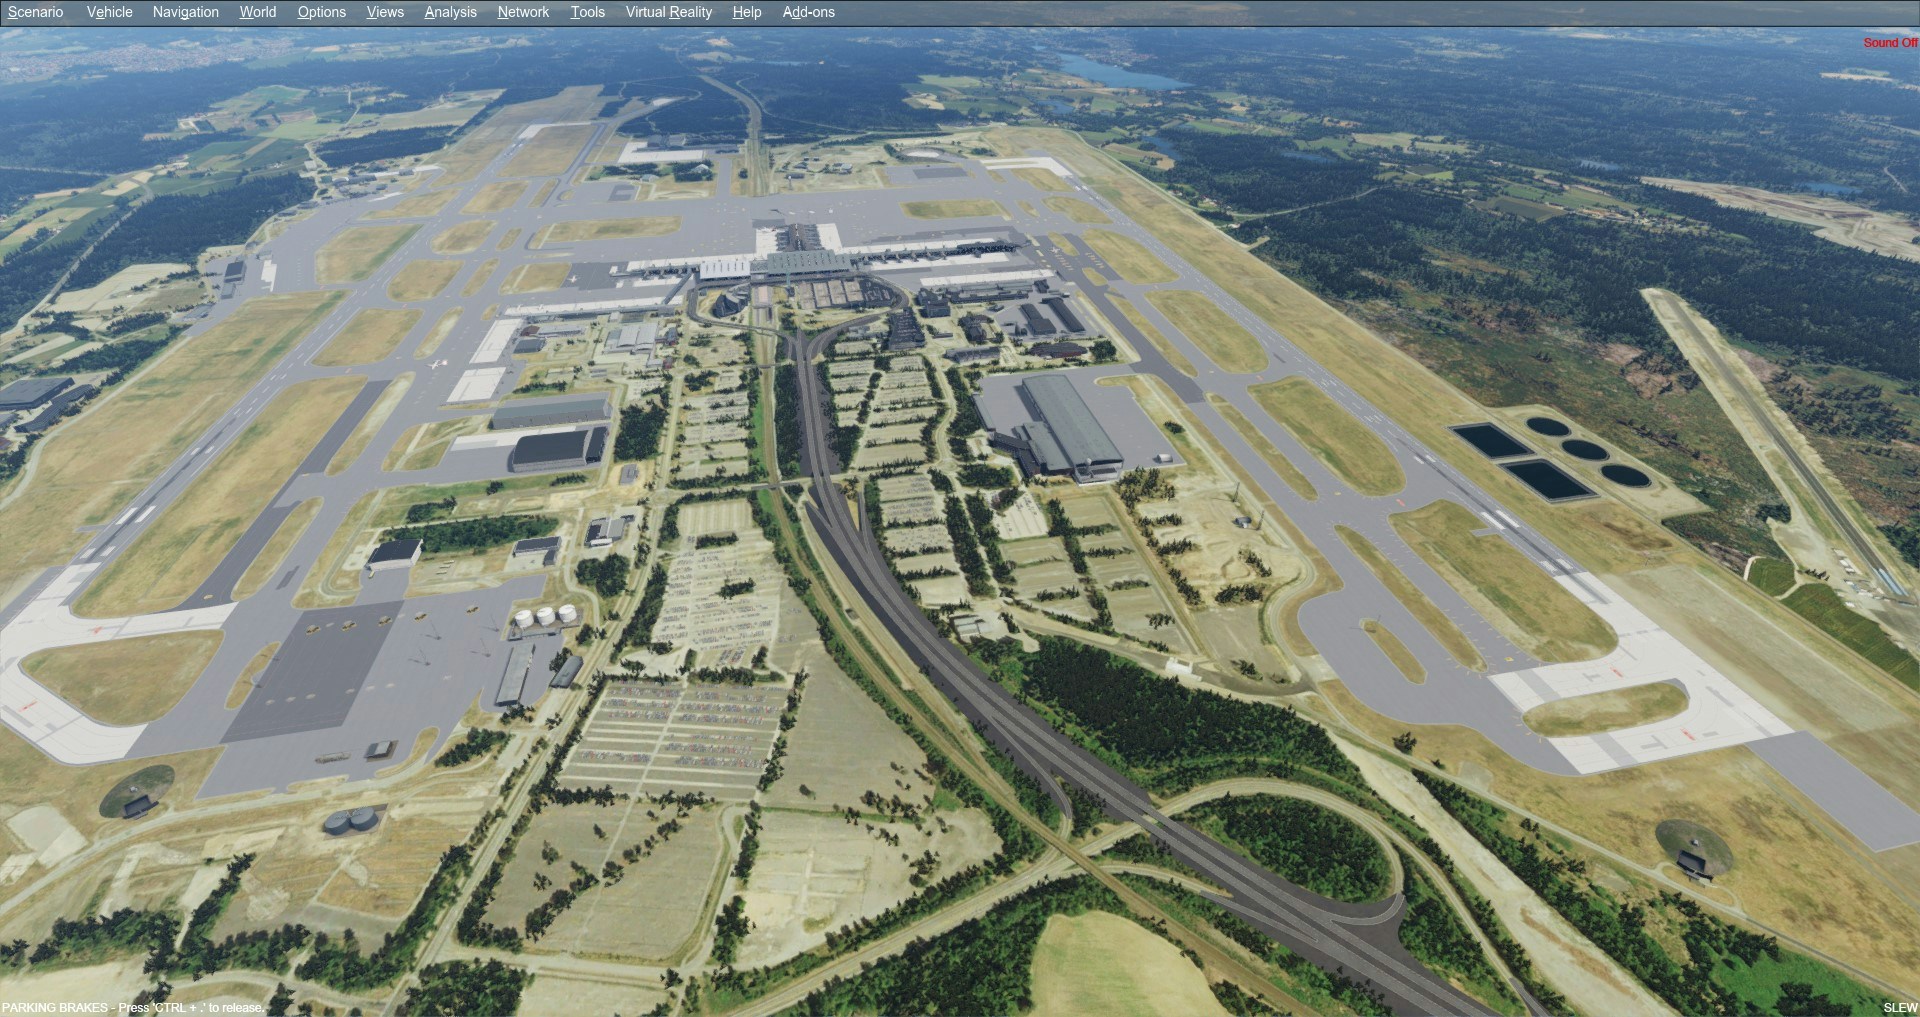 JustSim Releases Oslo Airport Gardermoen for P3Dv5